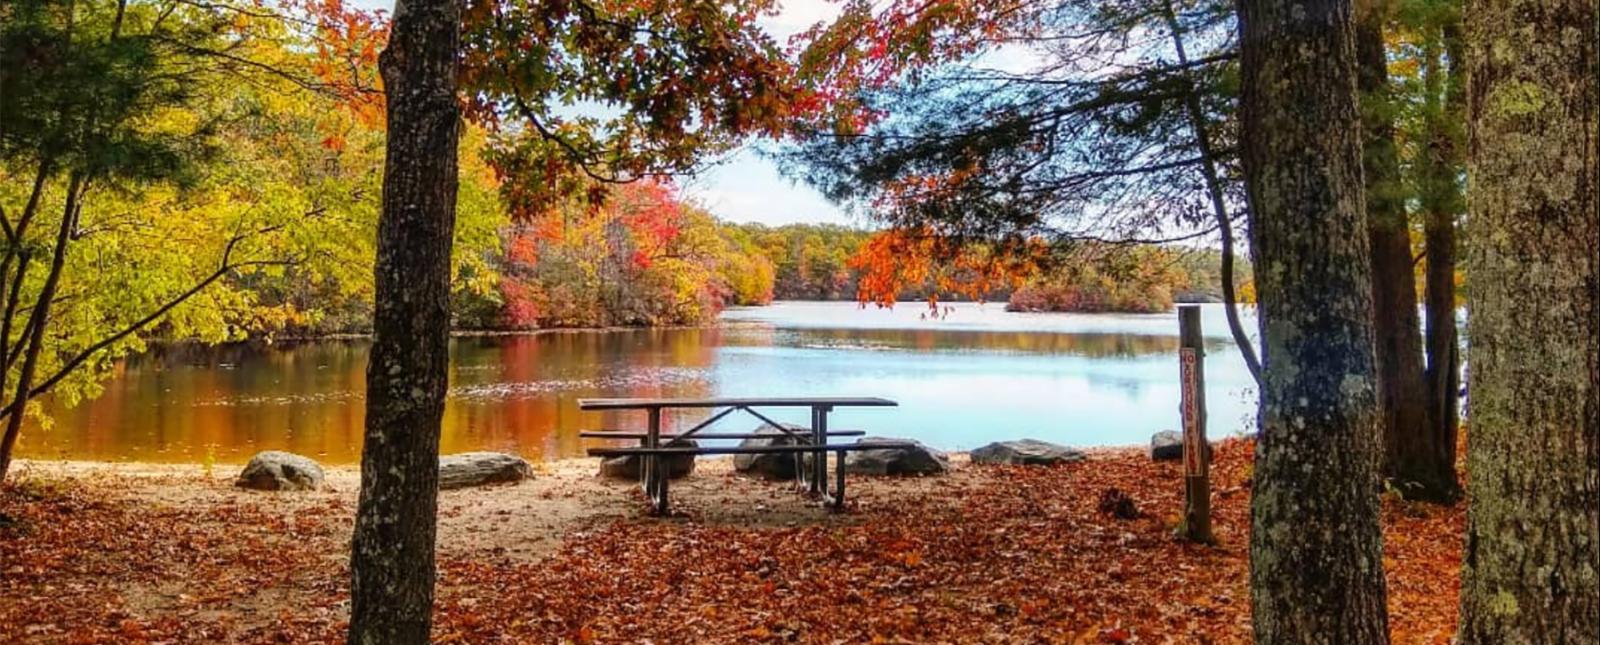 A campsite near a lake in the fall (Instagram@agollieno)